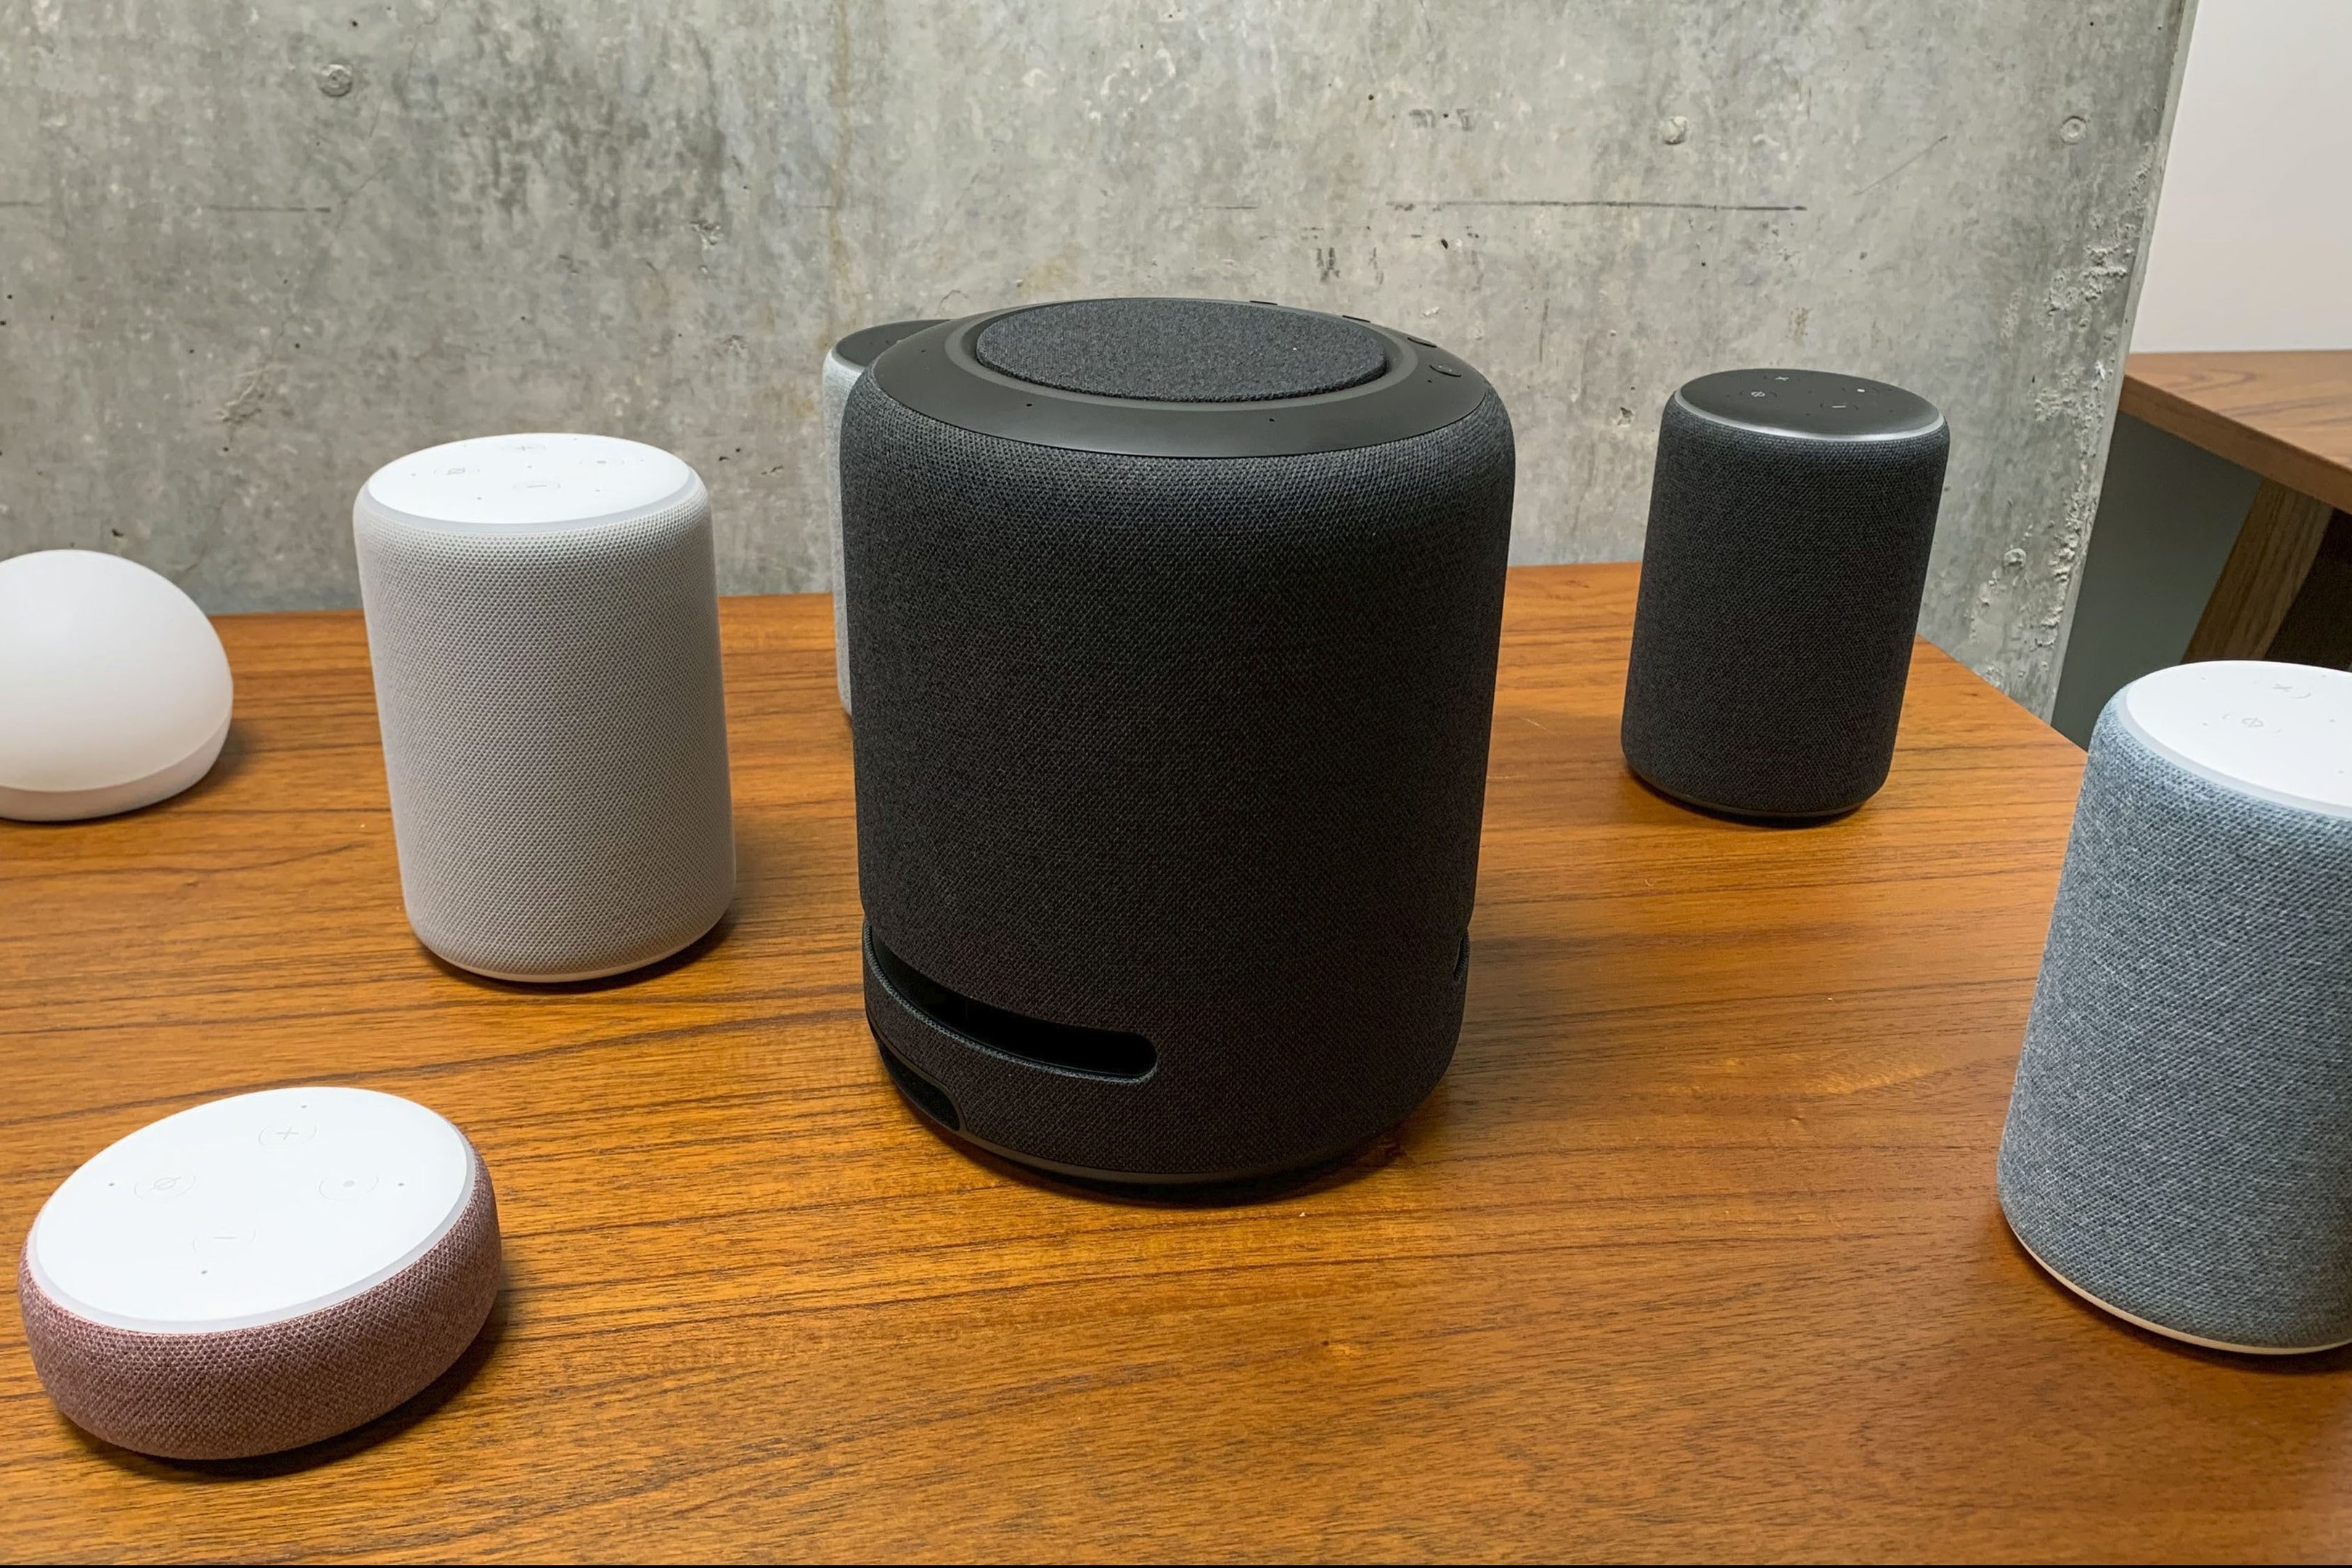 Echo Studio, da Amazon, tem 5 alto-falantes e promete áudio potente